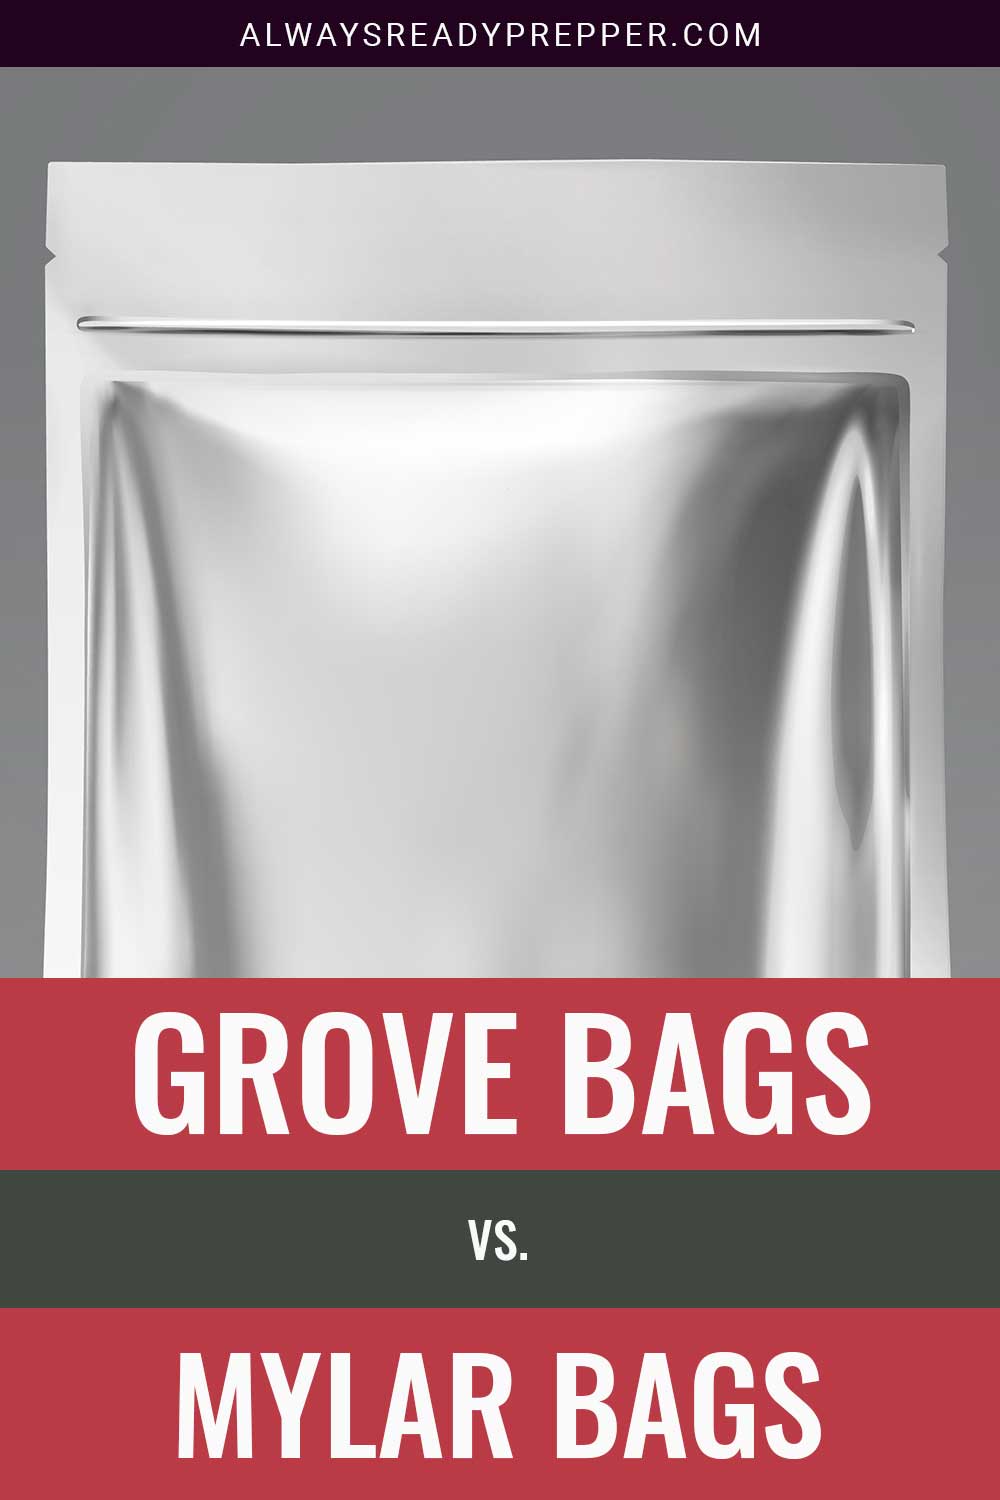 A silver color mylar bag - Grove Bags vs. Mylar Bags.